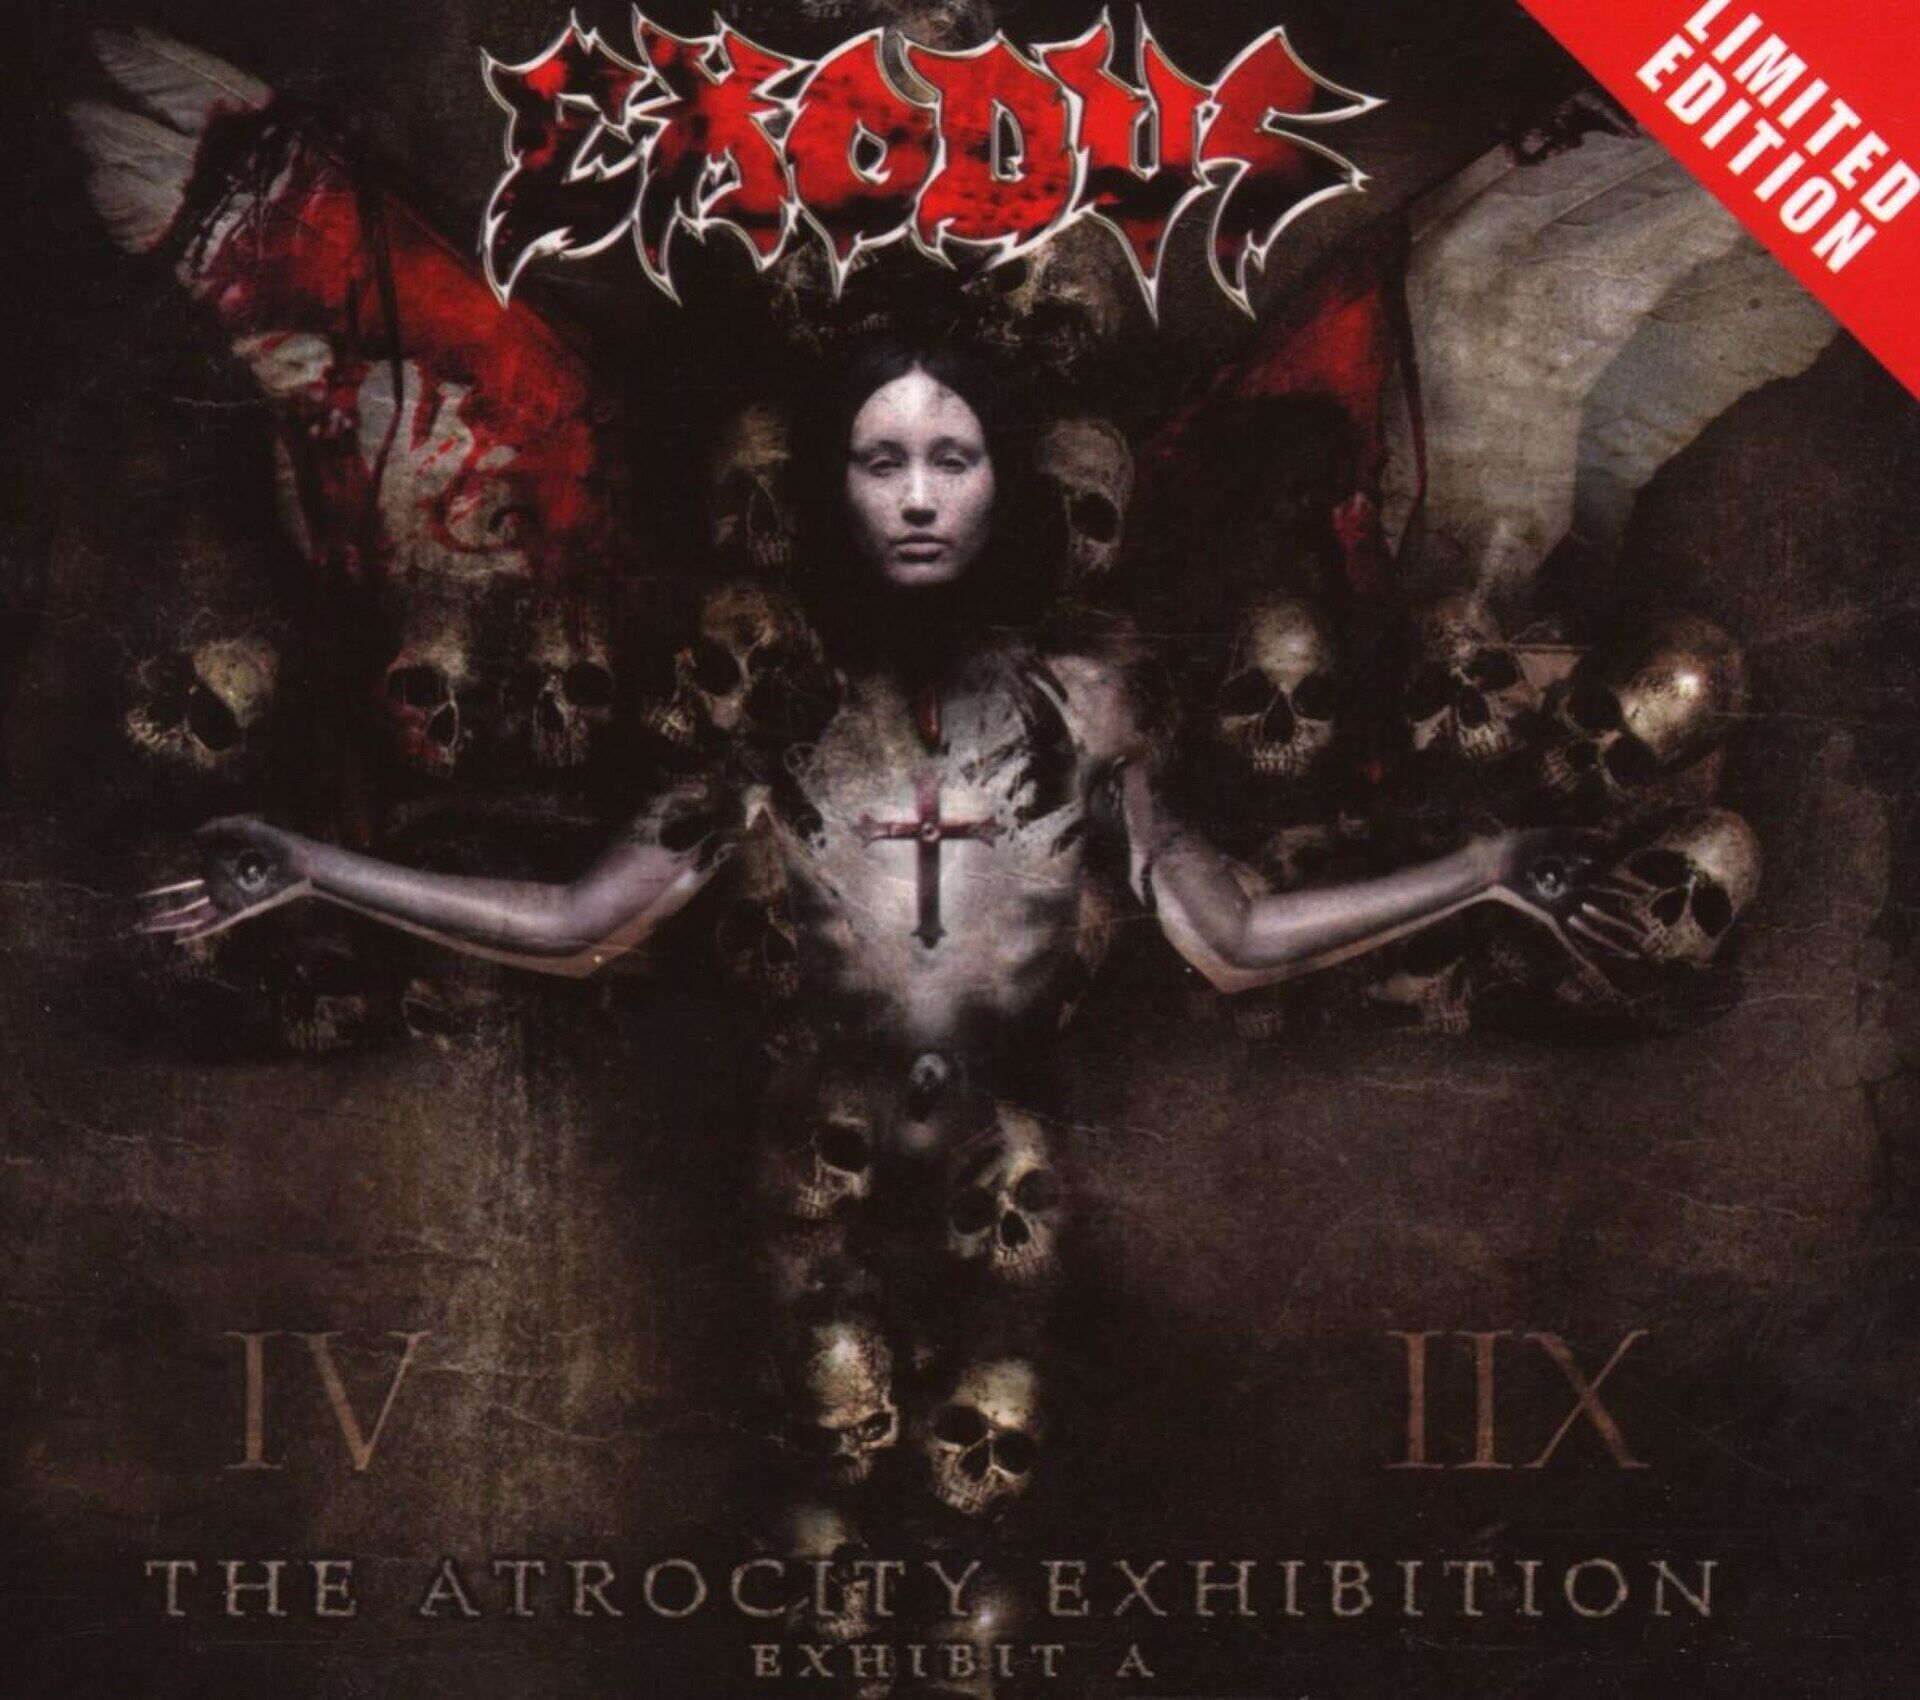 EXODUS - The Atrocity Exhibition - Exhibit A [CD]